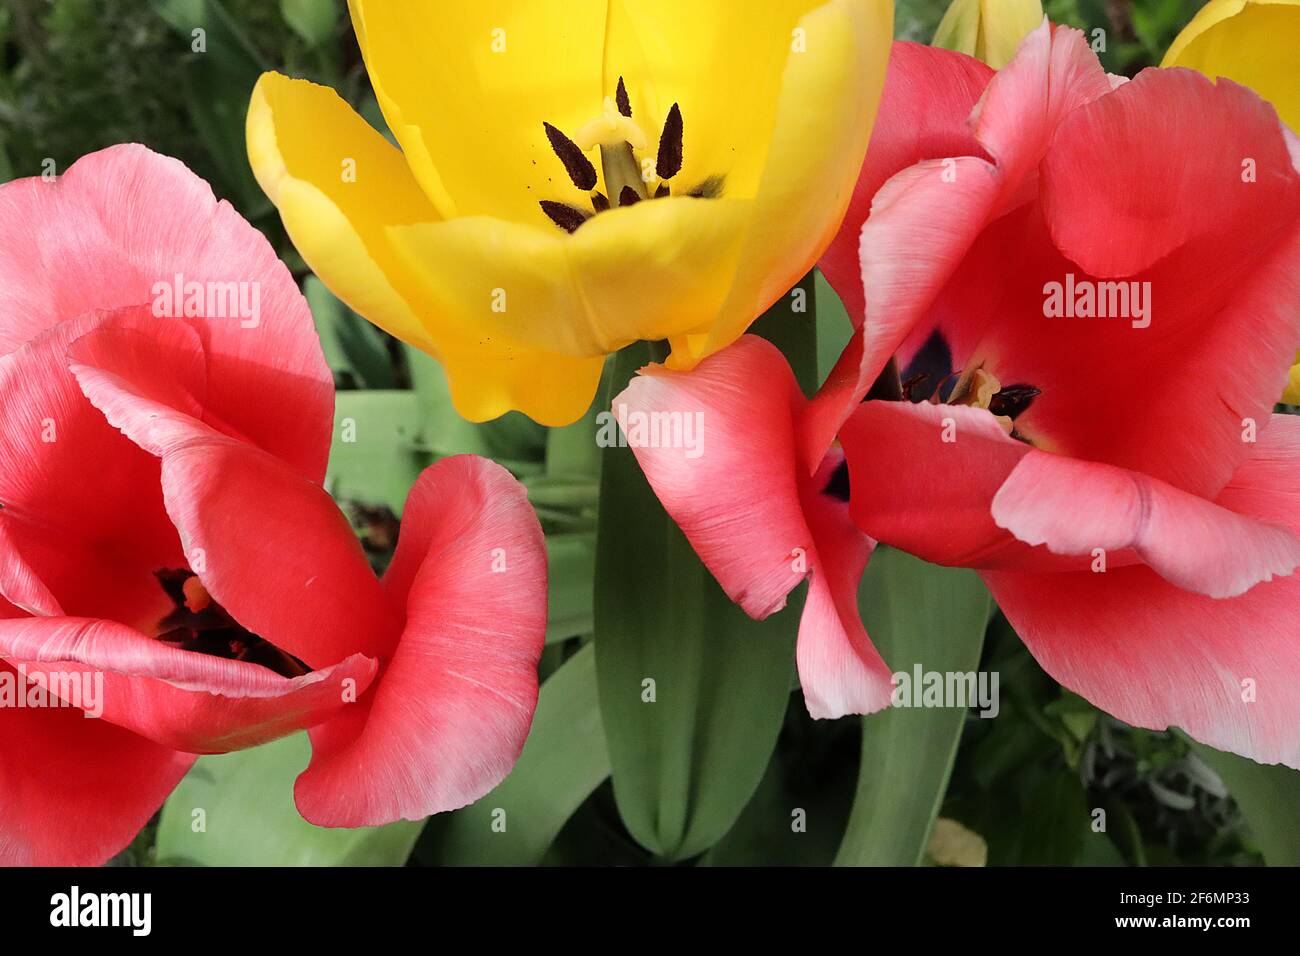 Tulipa / Tulip ‘Pink Impression’   Tulipa / Tulip ‘Golden Parade’ Darwin hybrid 4 Very large pink and yellow tulips, April, England, UK Stock Photo